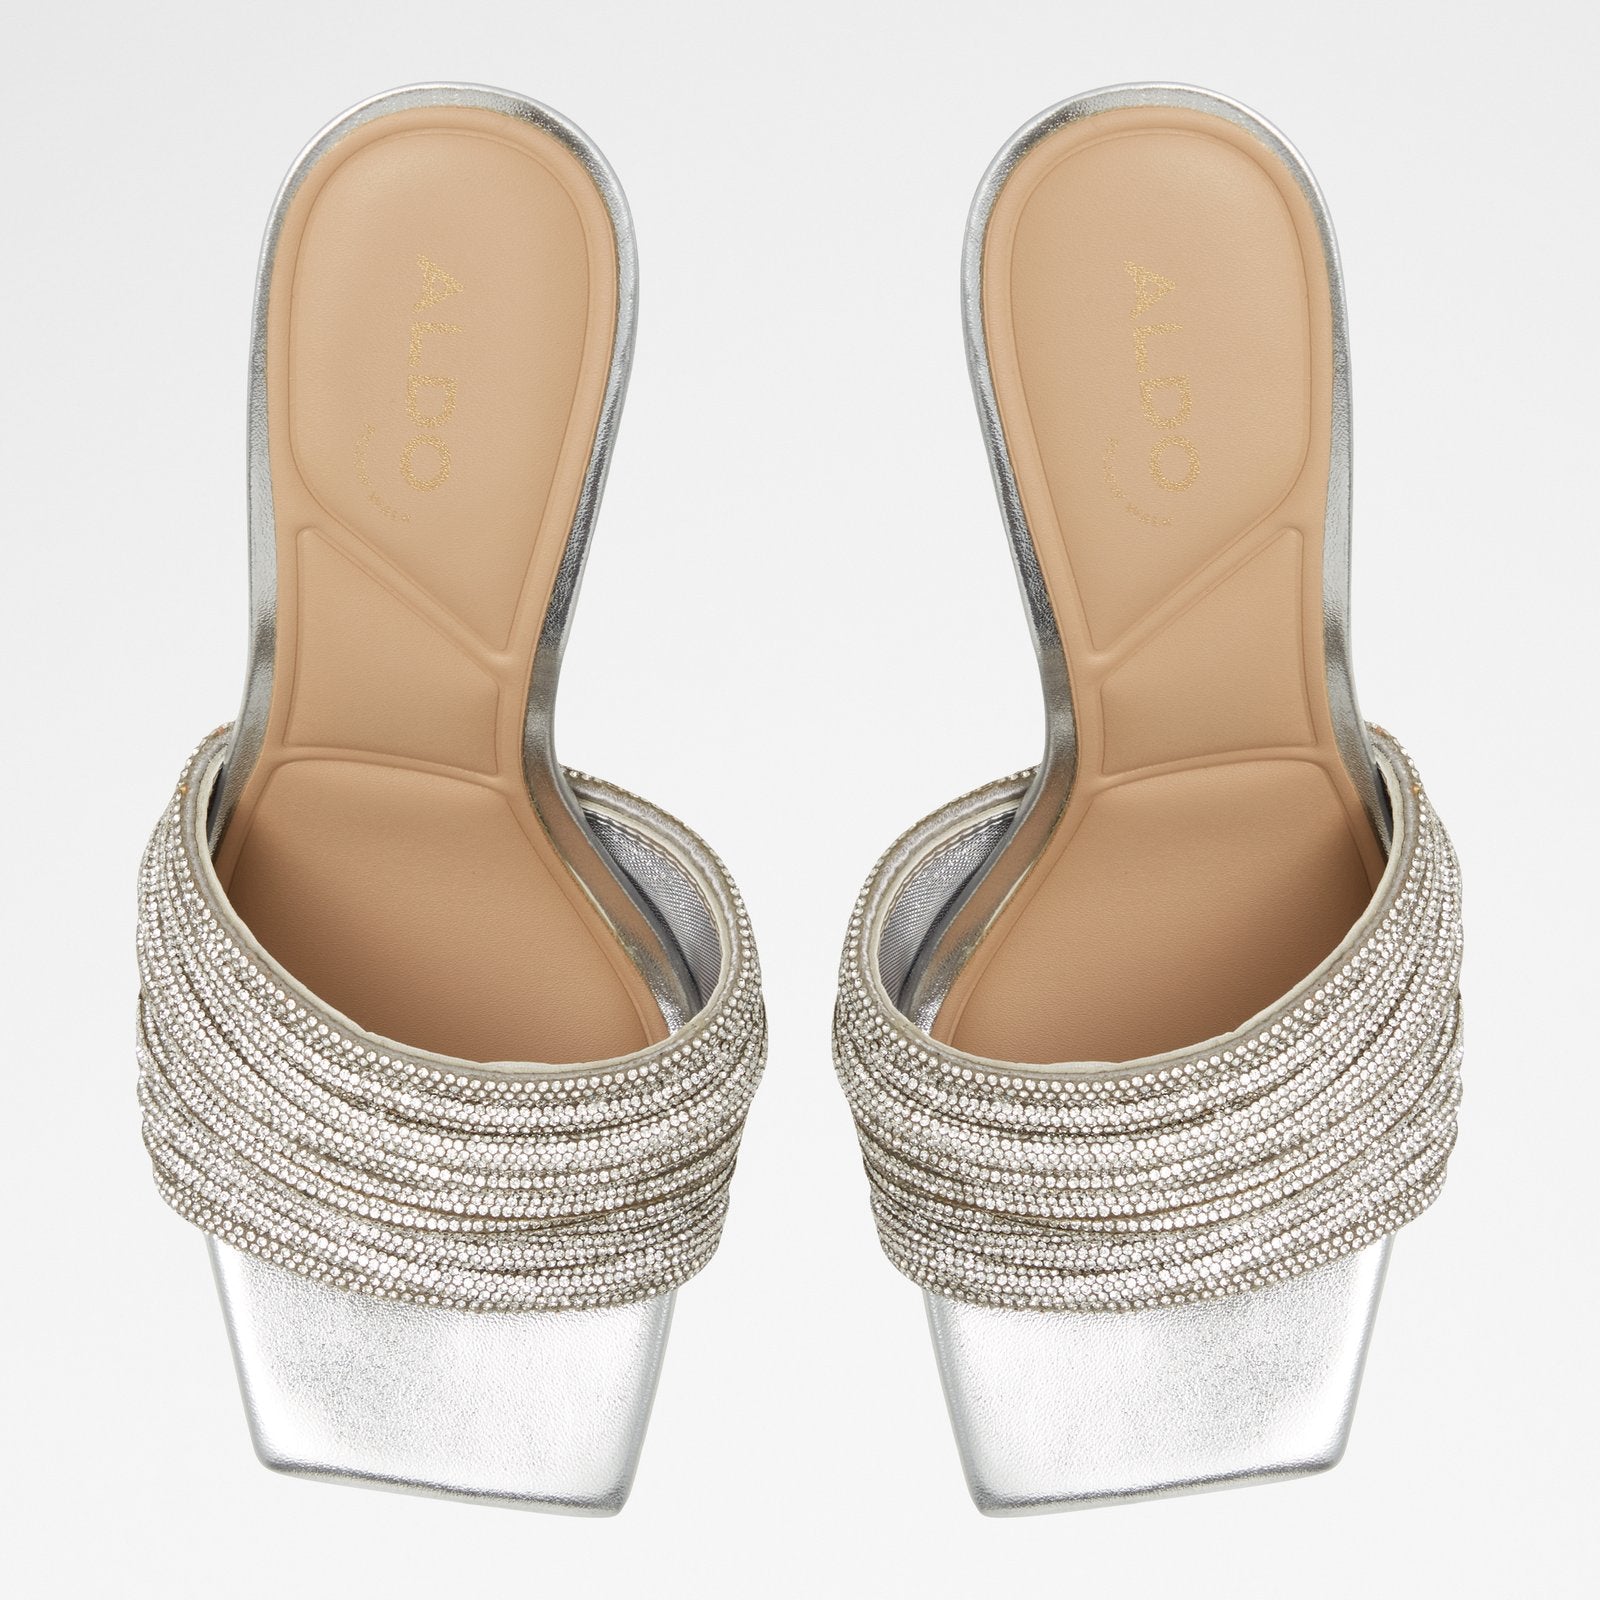 Marielle / Heeled Sandals